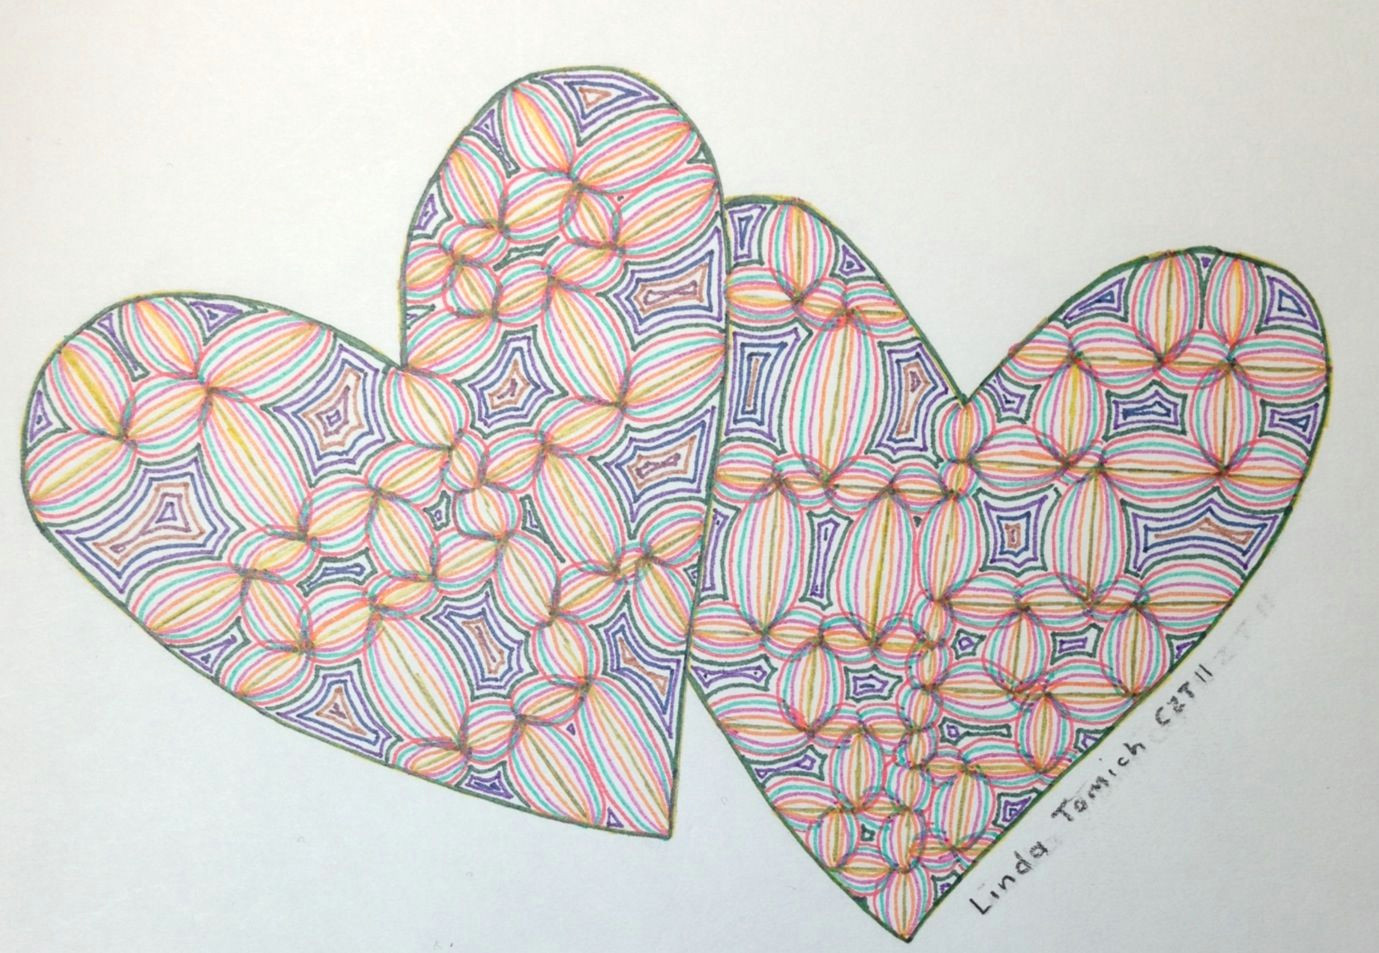 Drawing Two Heart Zentangle Two Hearts Zentangles Color Pinterest Heart